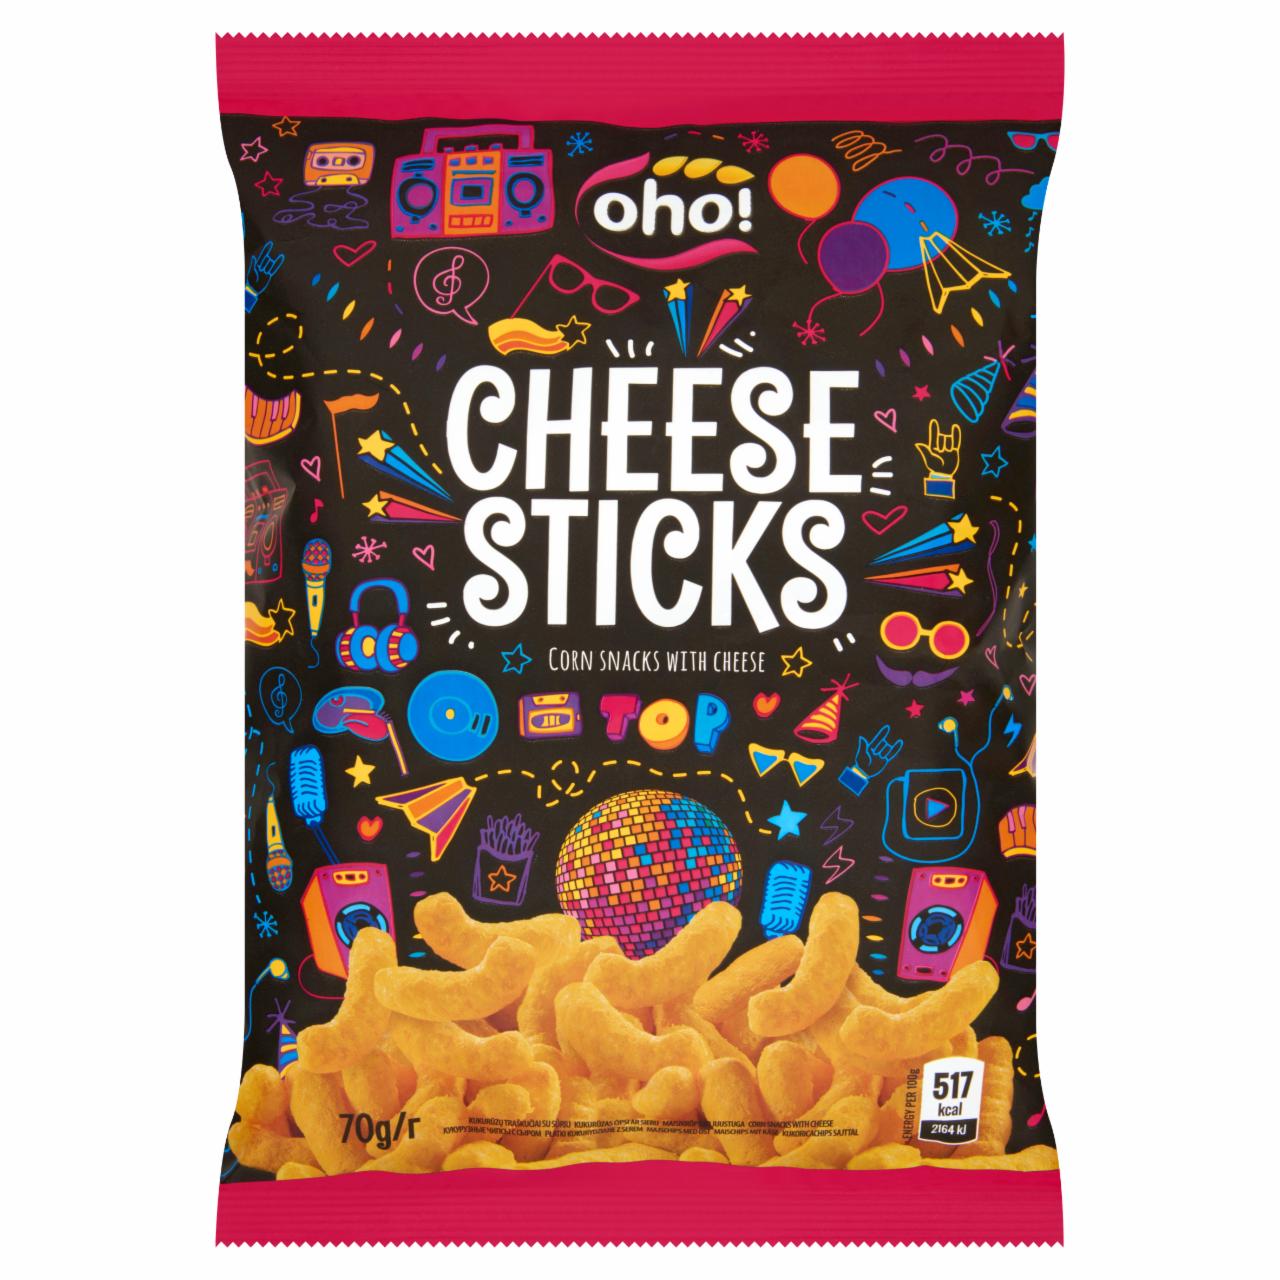 Képek - Oho! Cheese Sticks kukoricachips sajttal 70 g